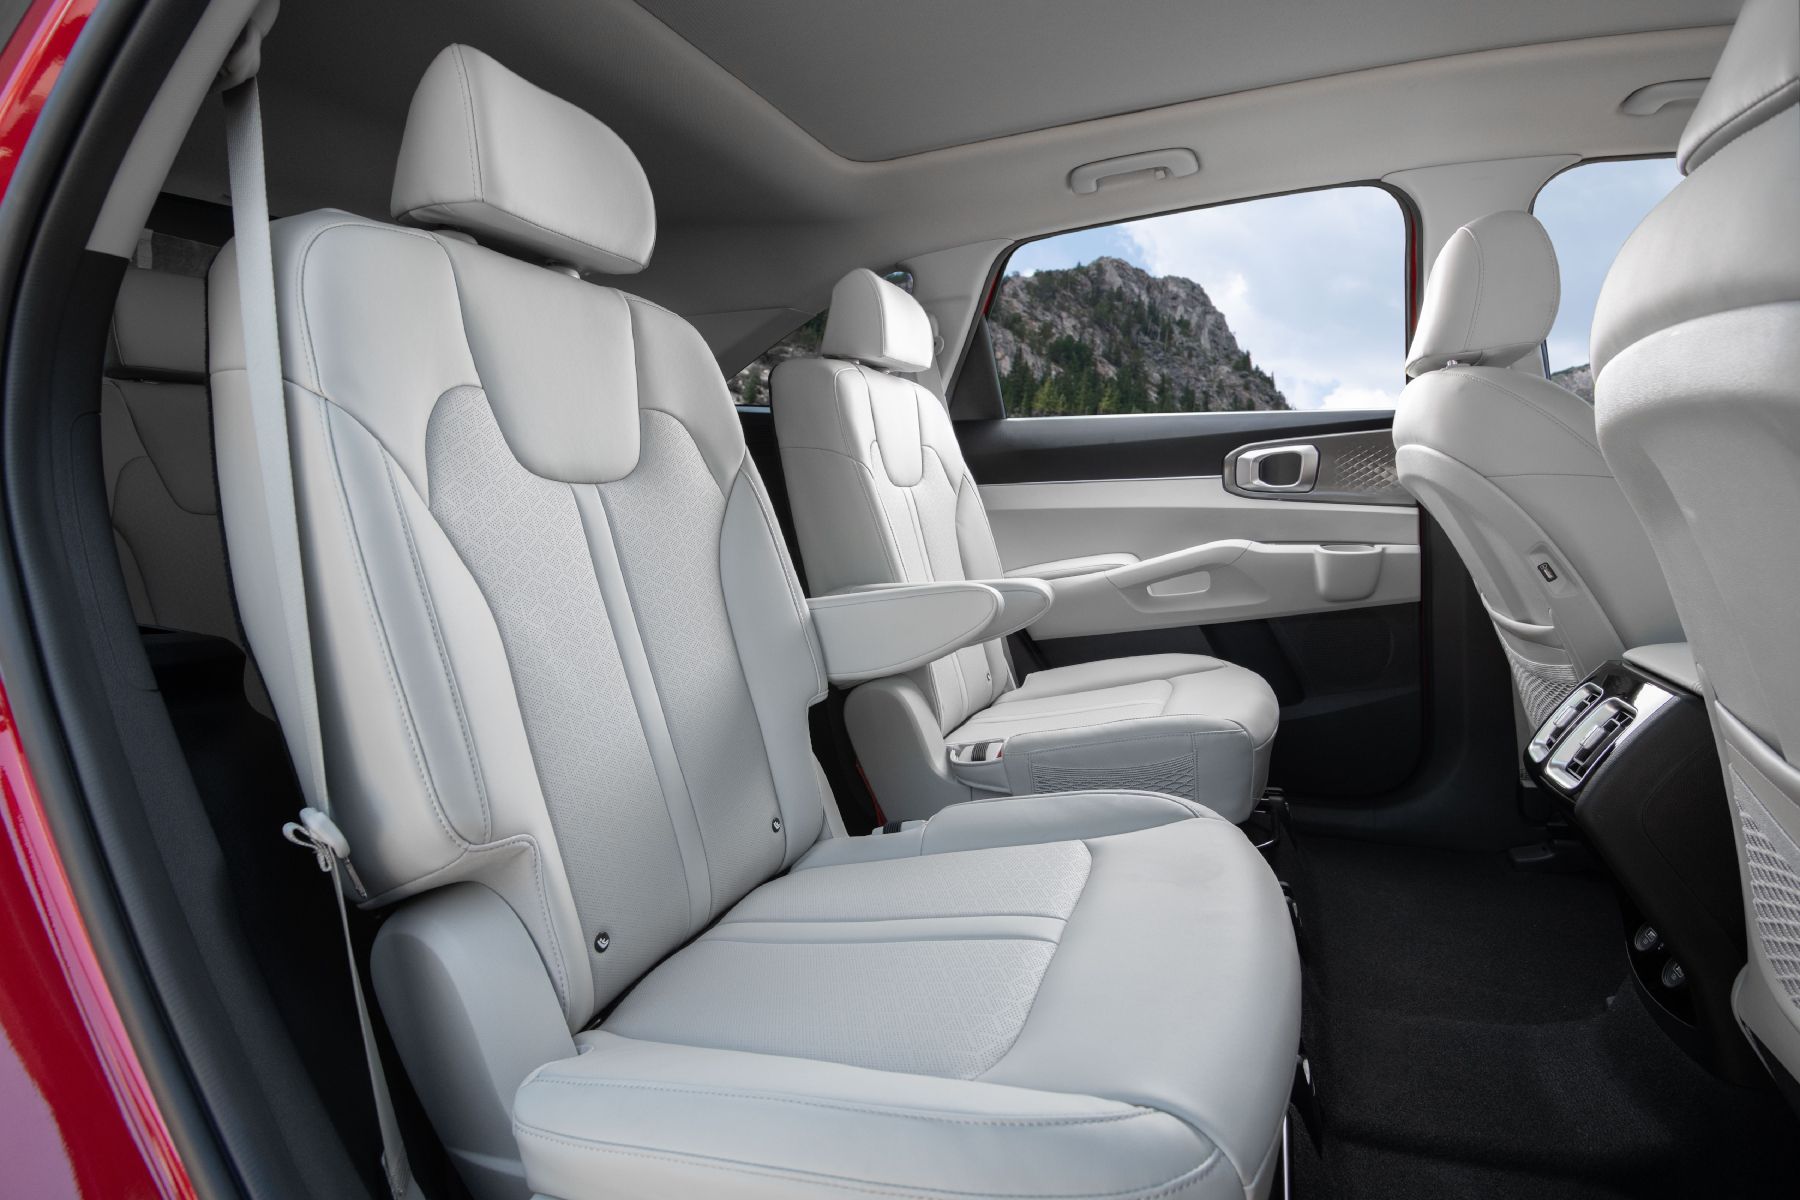 Interior of the 2022 Kia Sorento Hybrid showing the second-row captain seats.